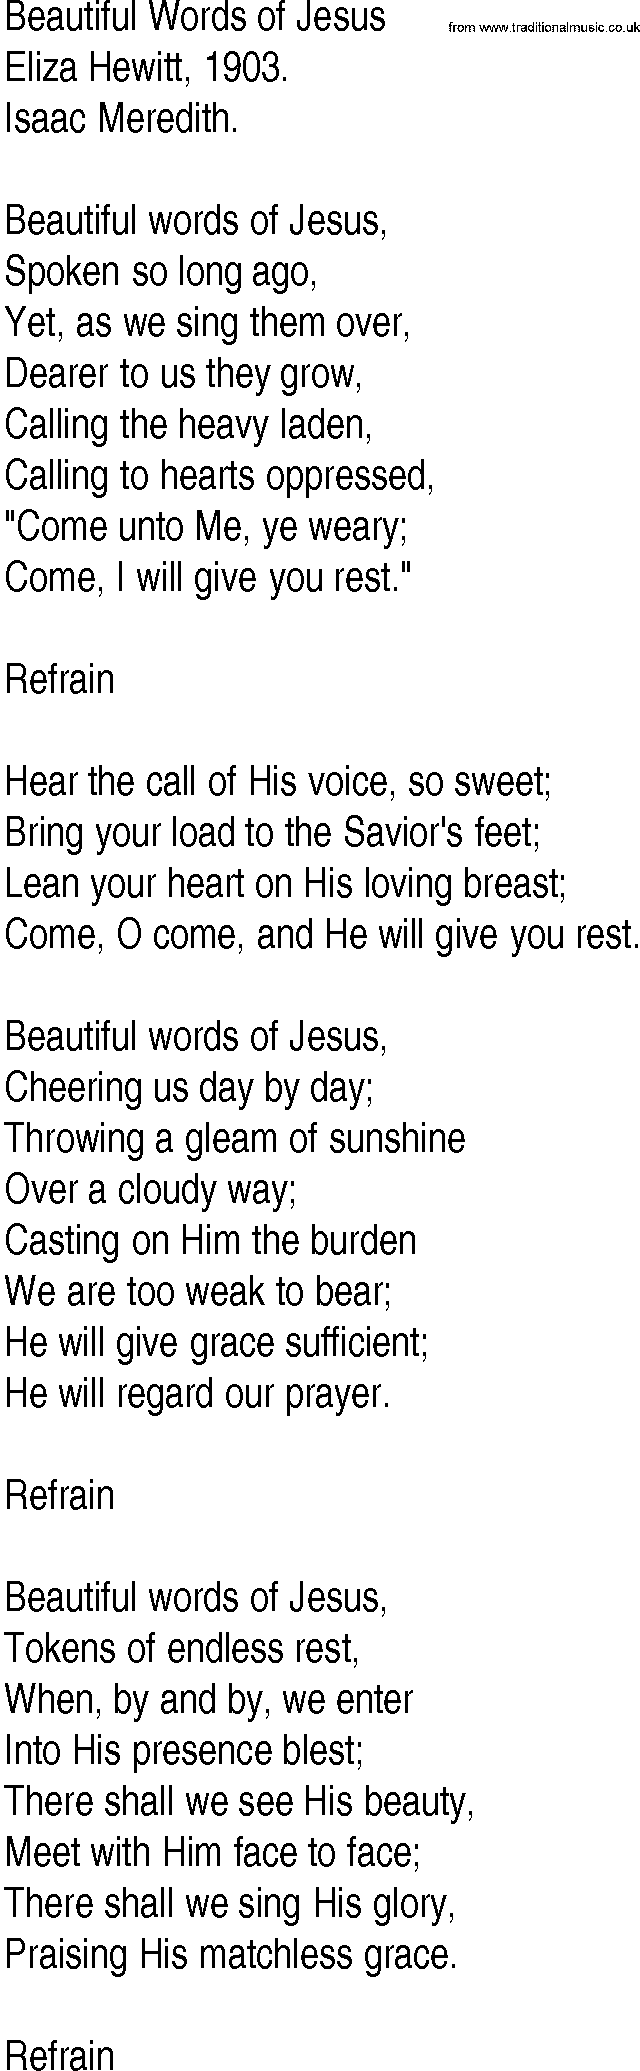 Hymn and Gospel Song: Beautiful Words of Jesus by Eliza Hewitt lyrics